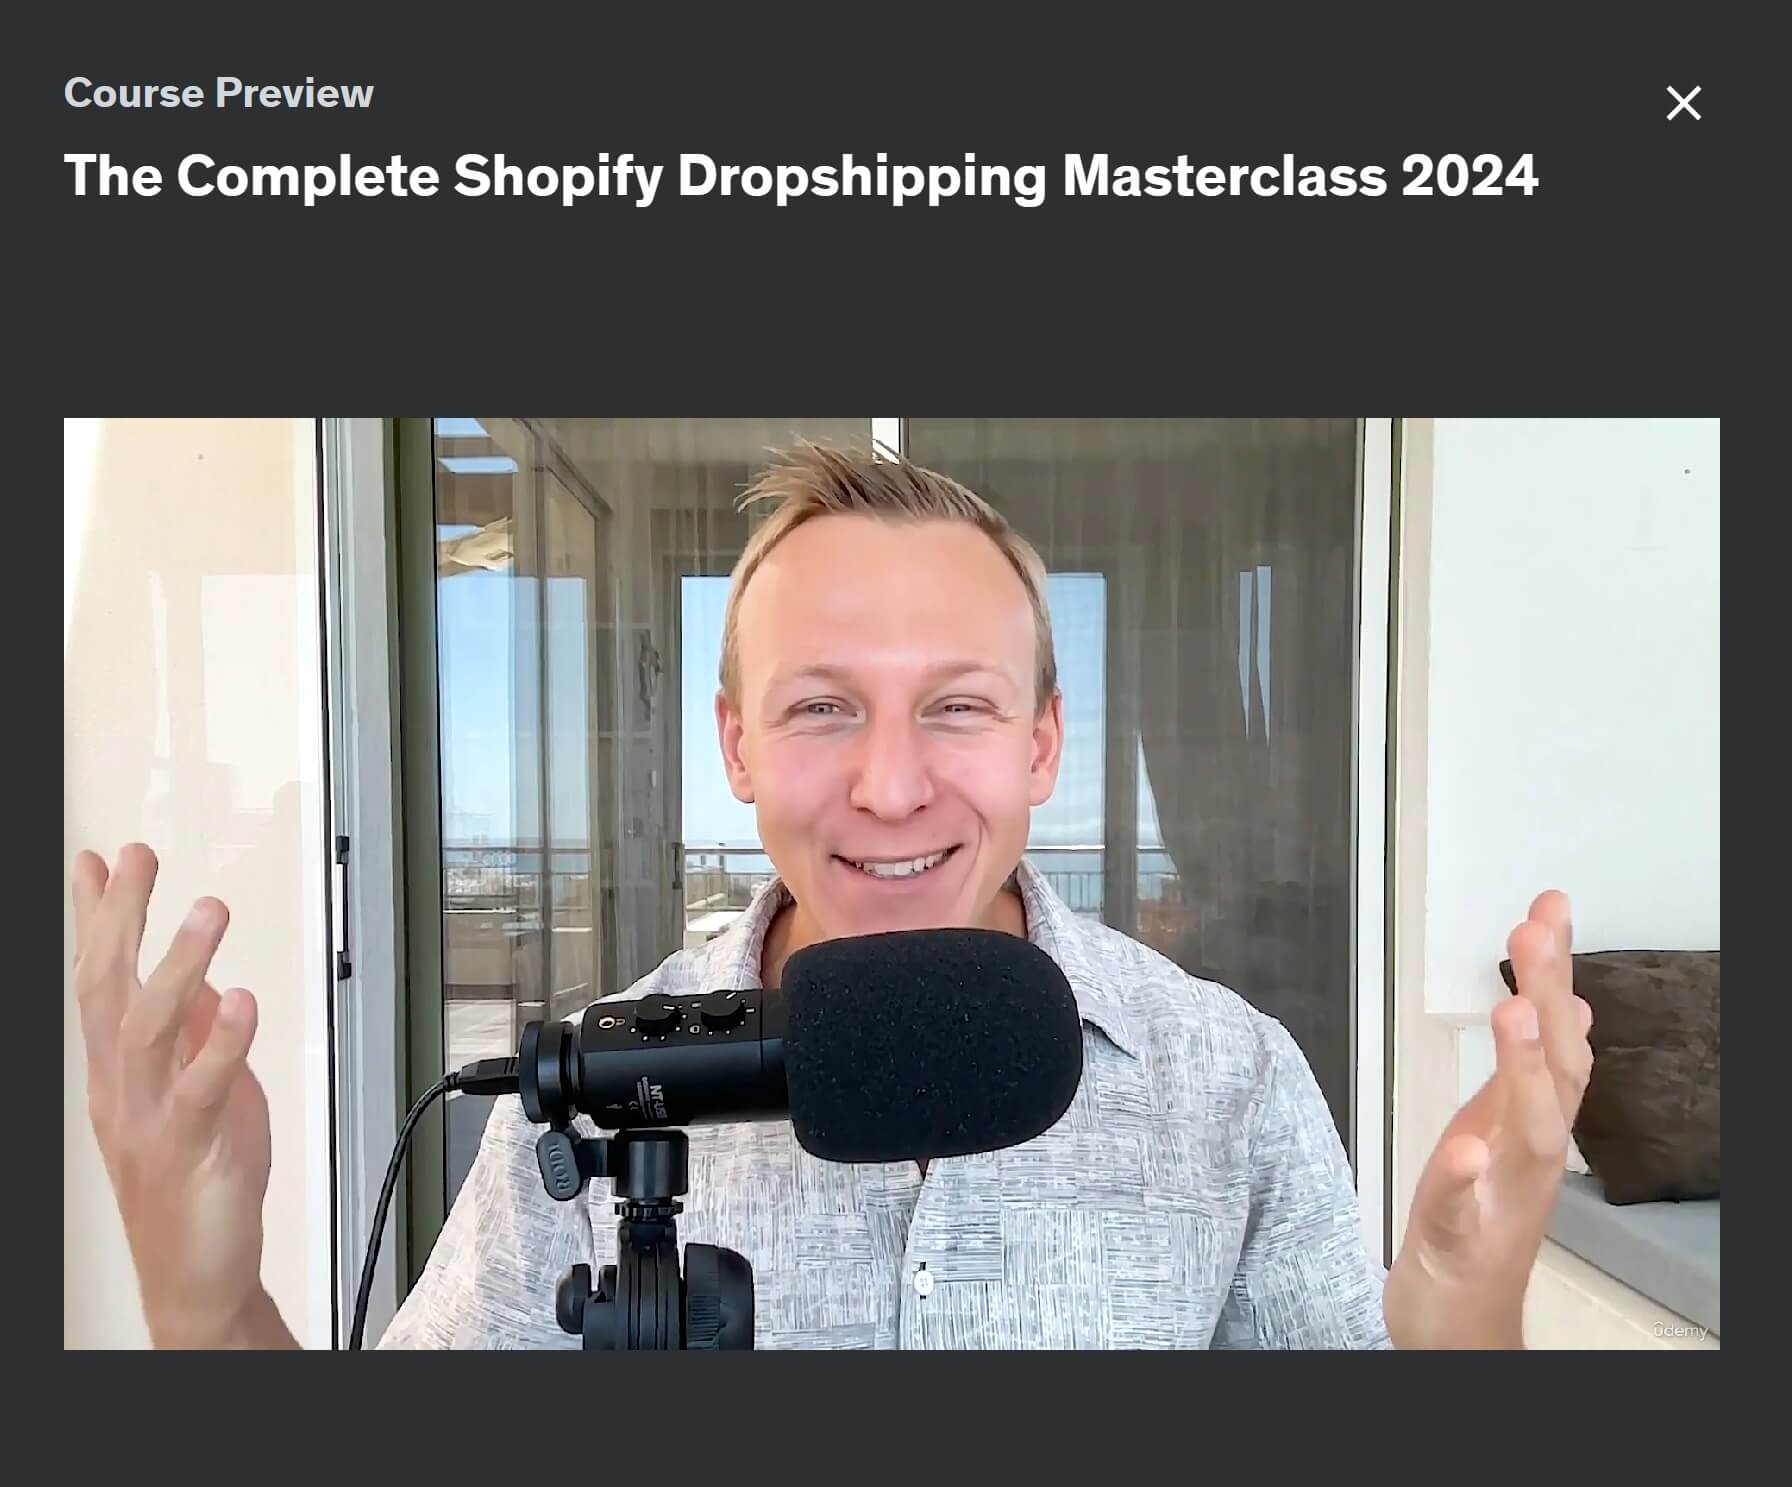 Vista previa completa de la clase magistral de dropshipping de Shopify 2024